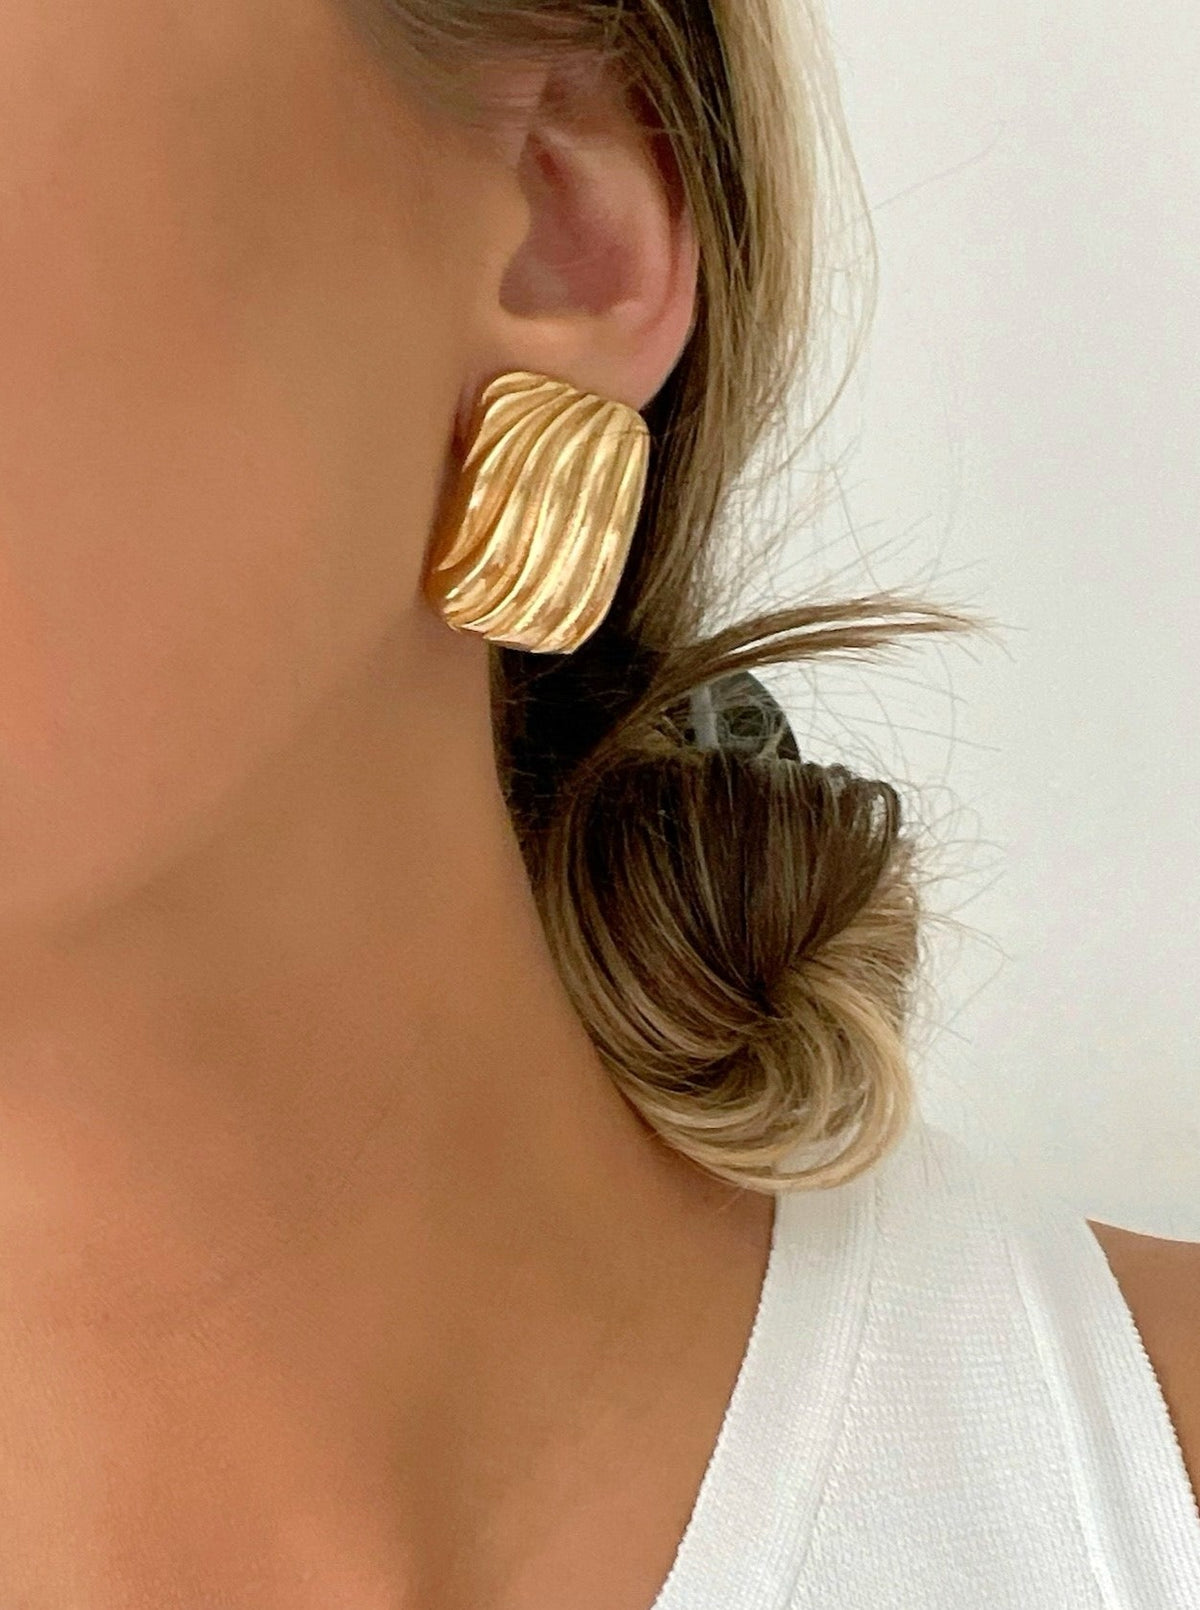 Gold-filled rectangle stud earrings, vintage-inspired design adding timeless elegance to any ensemble. 